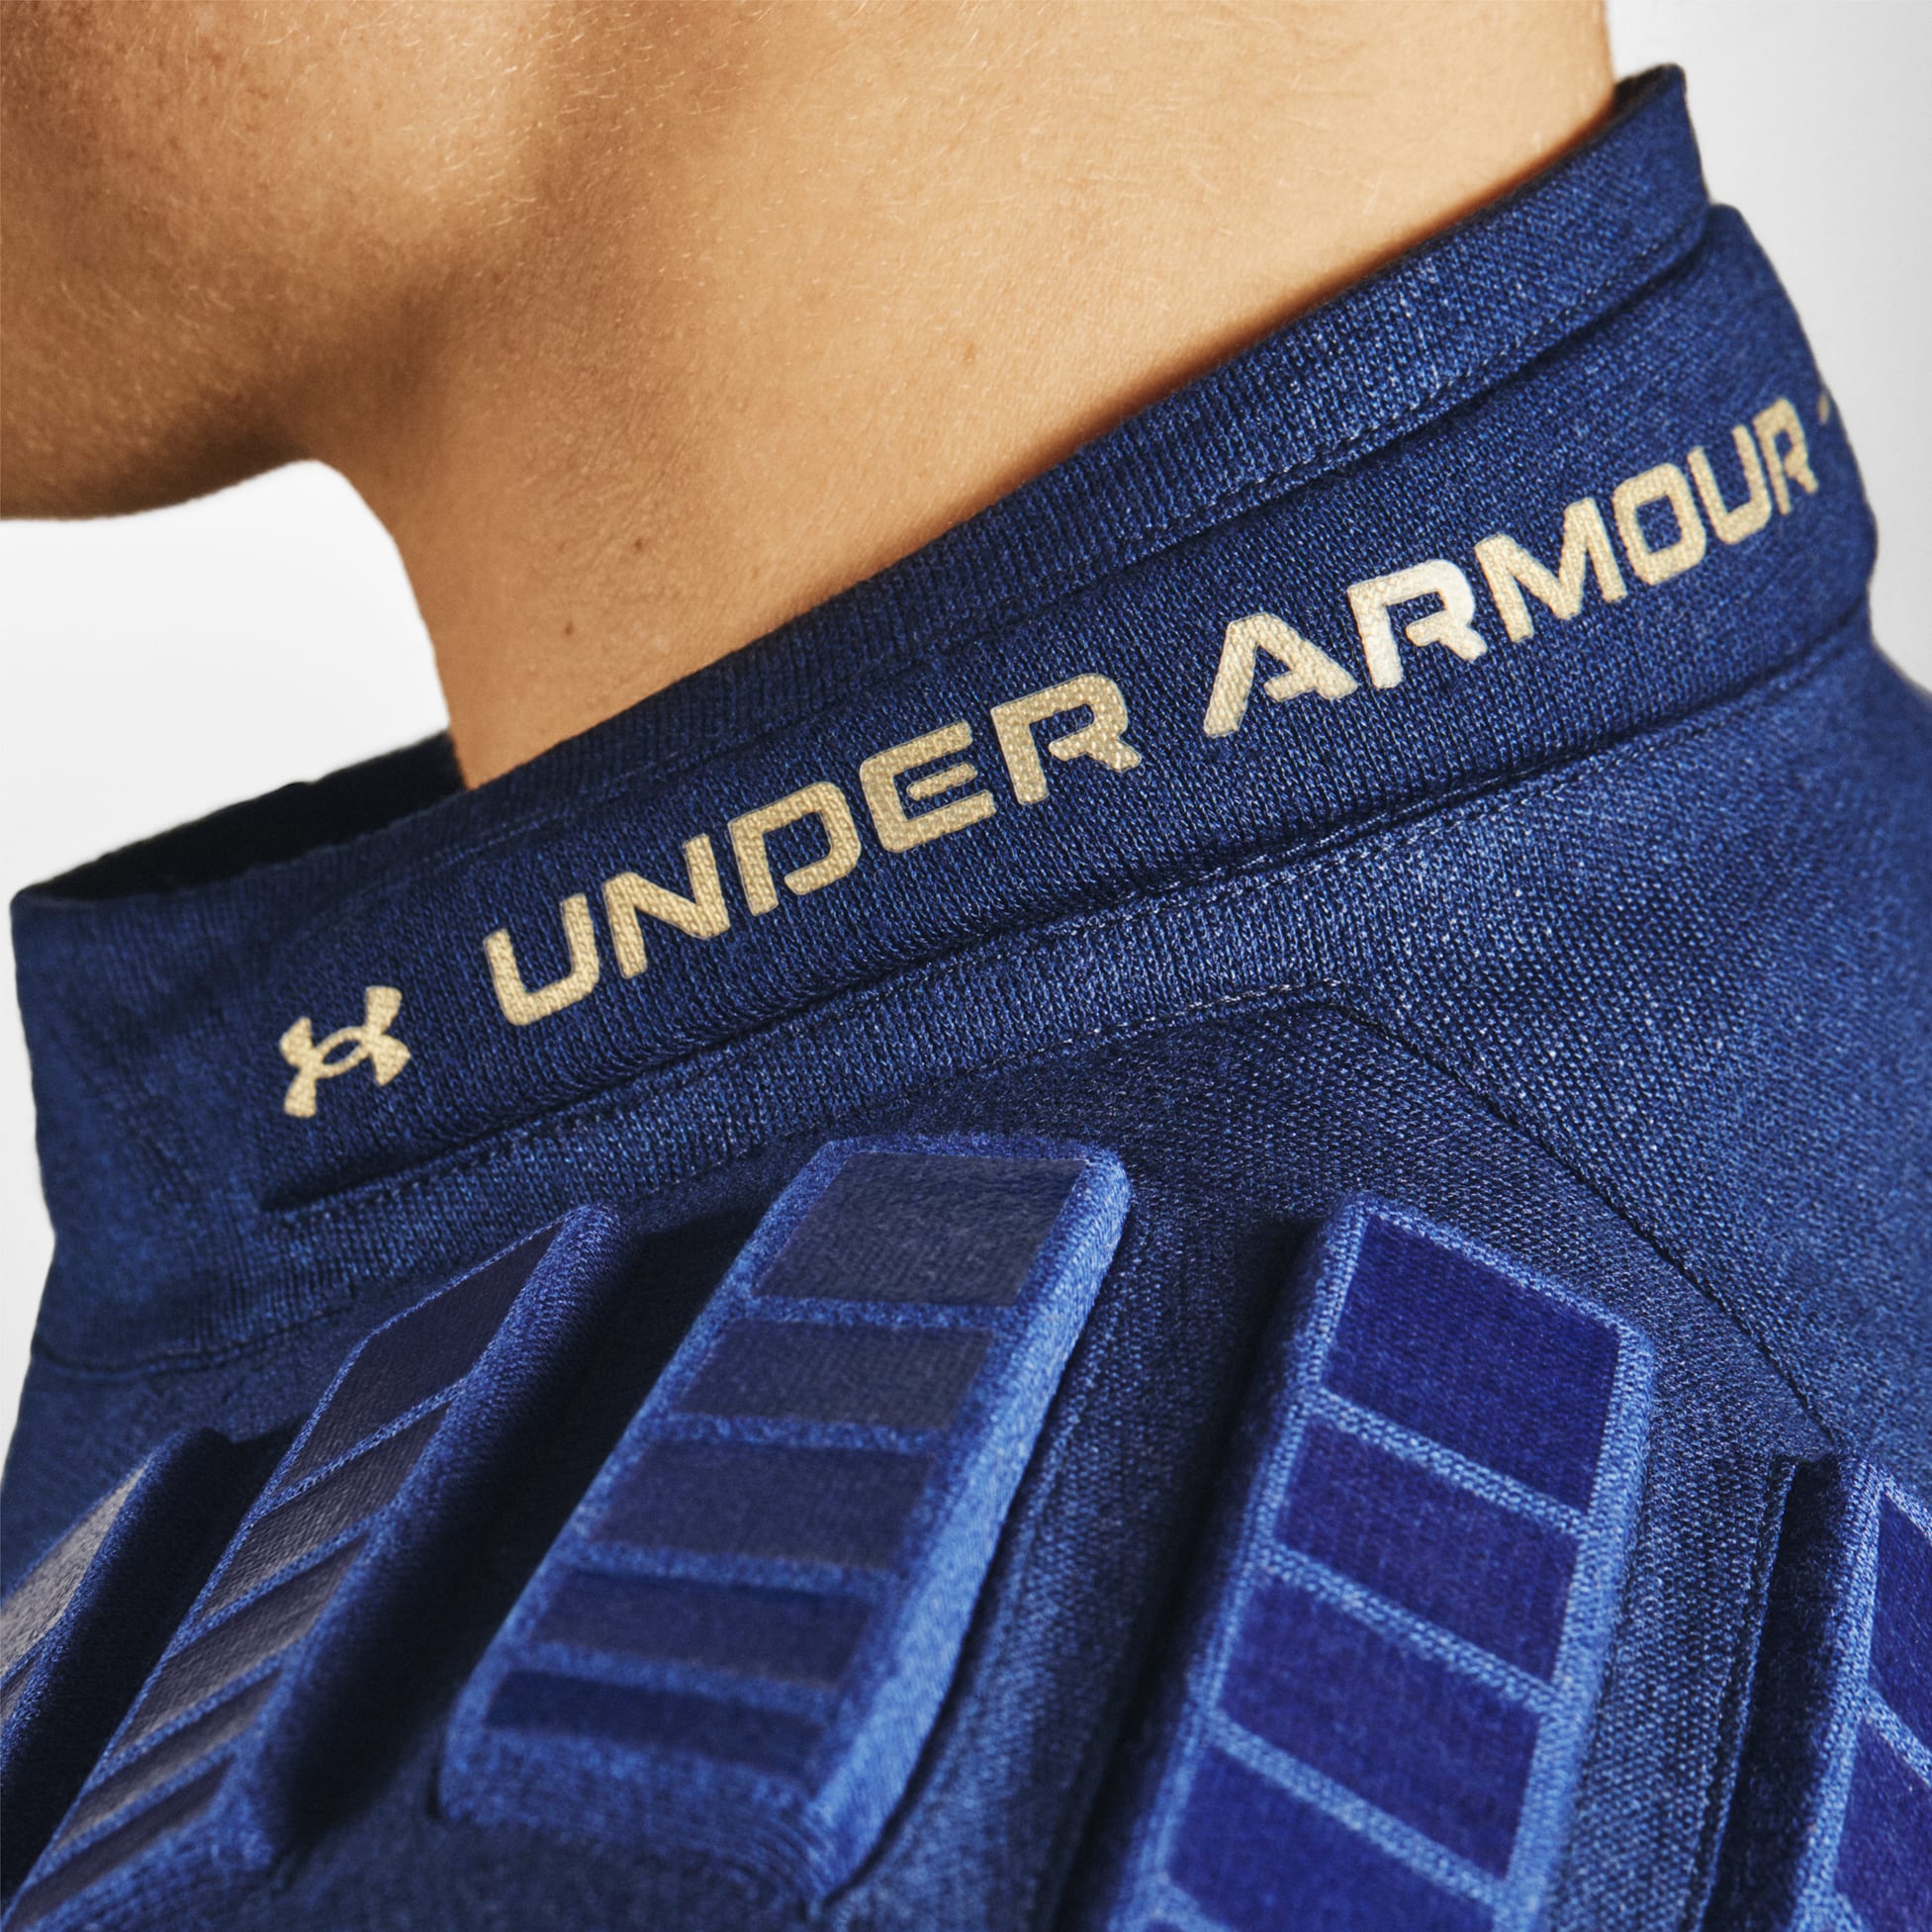 Under Armour Virgin Galactic Suit (Collar)